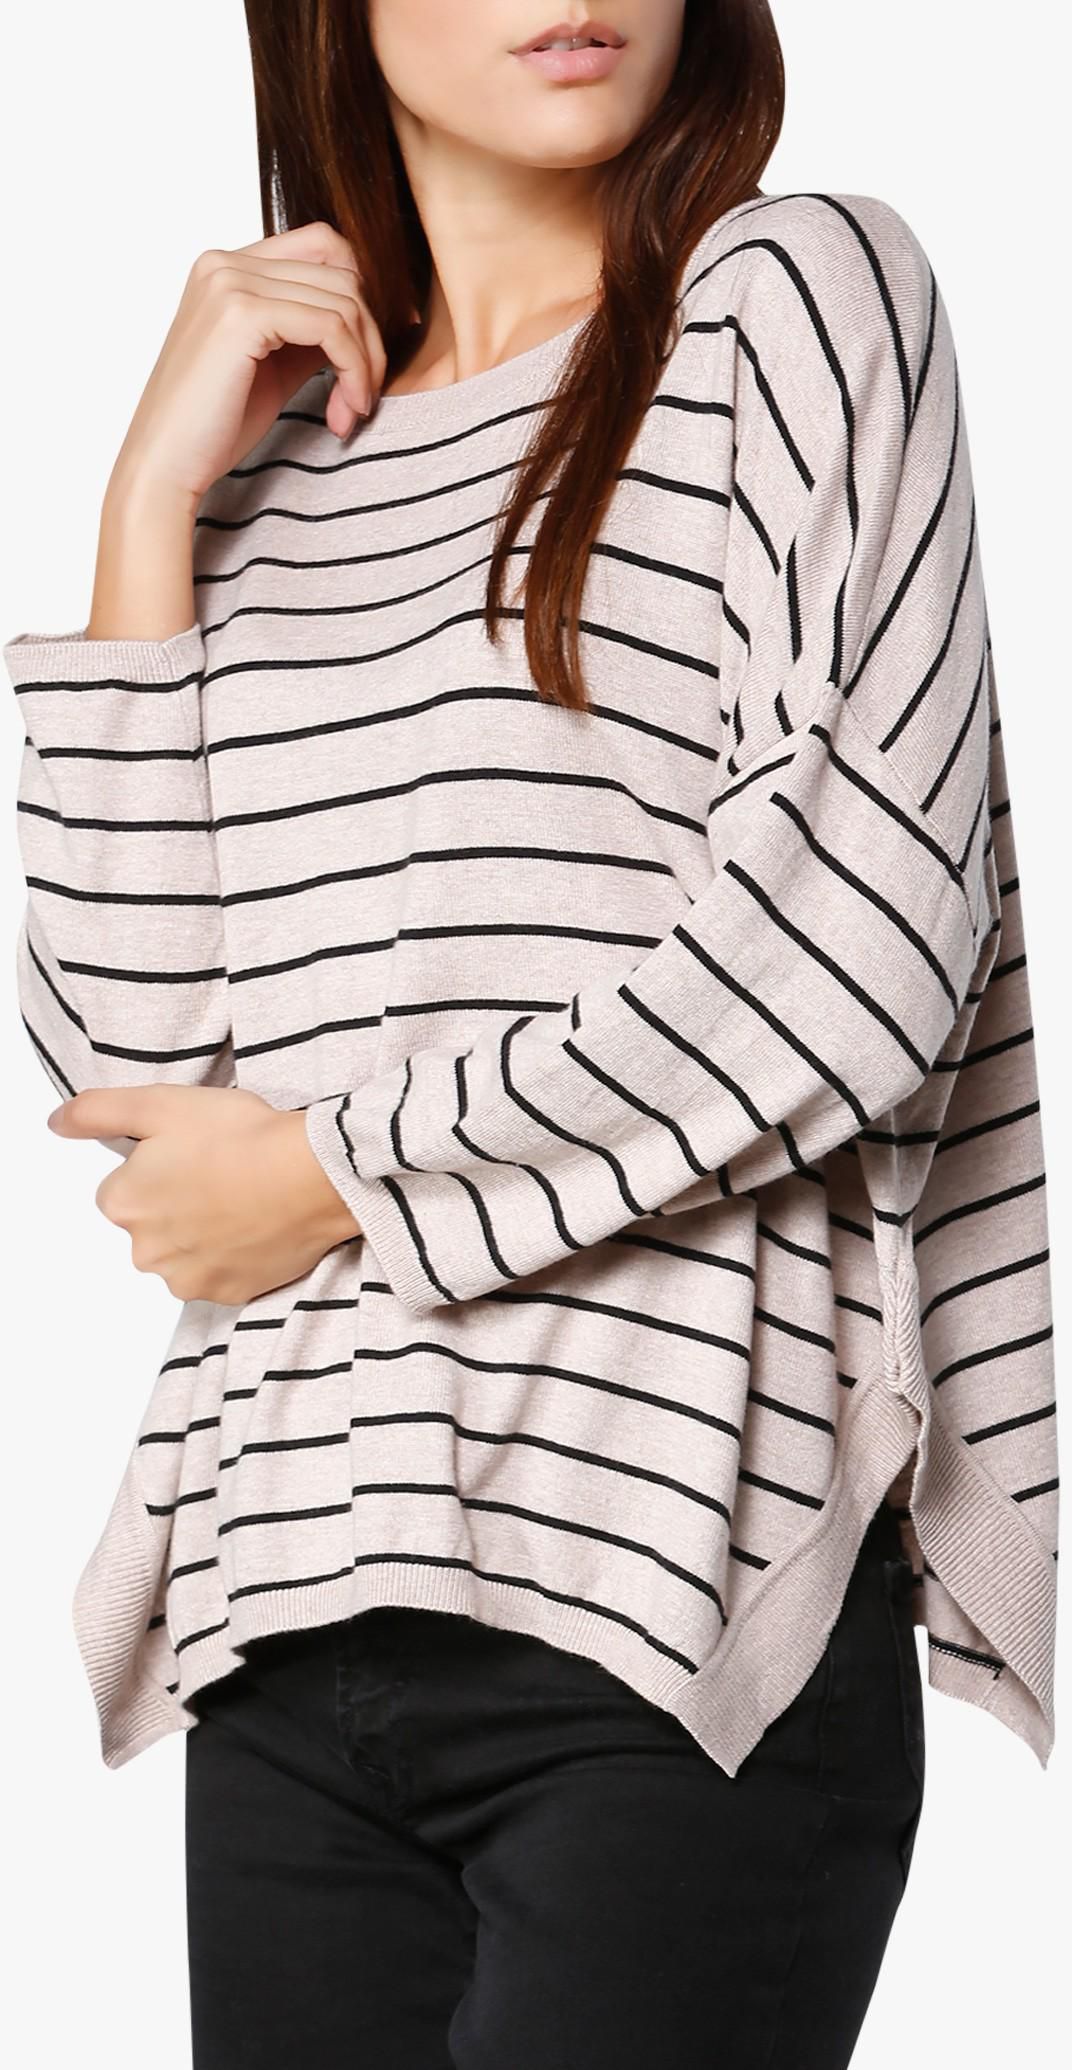 Striped Cotton-Blend Sweater